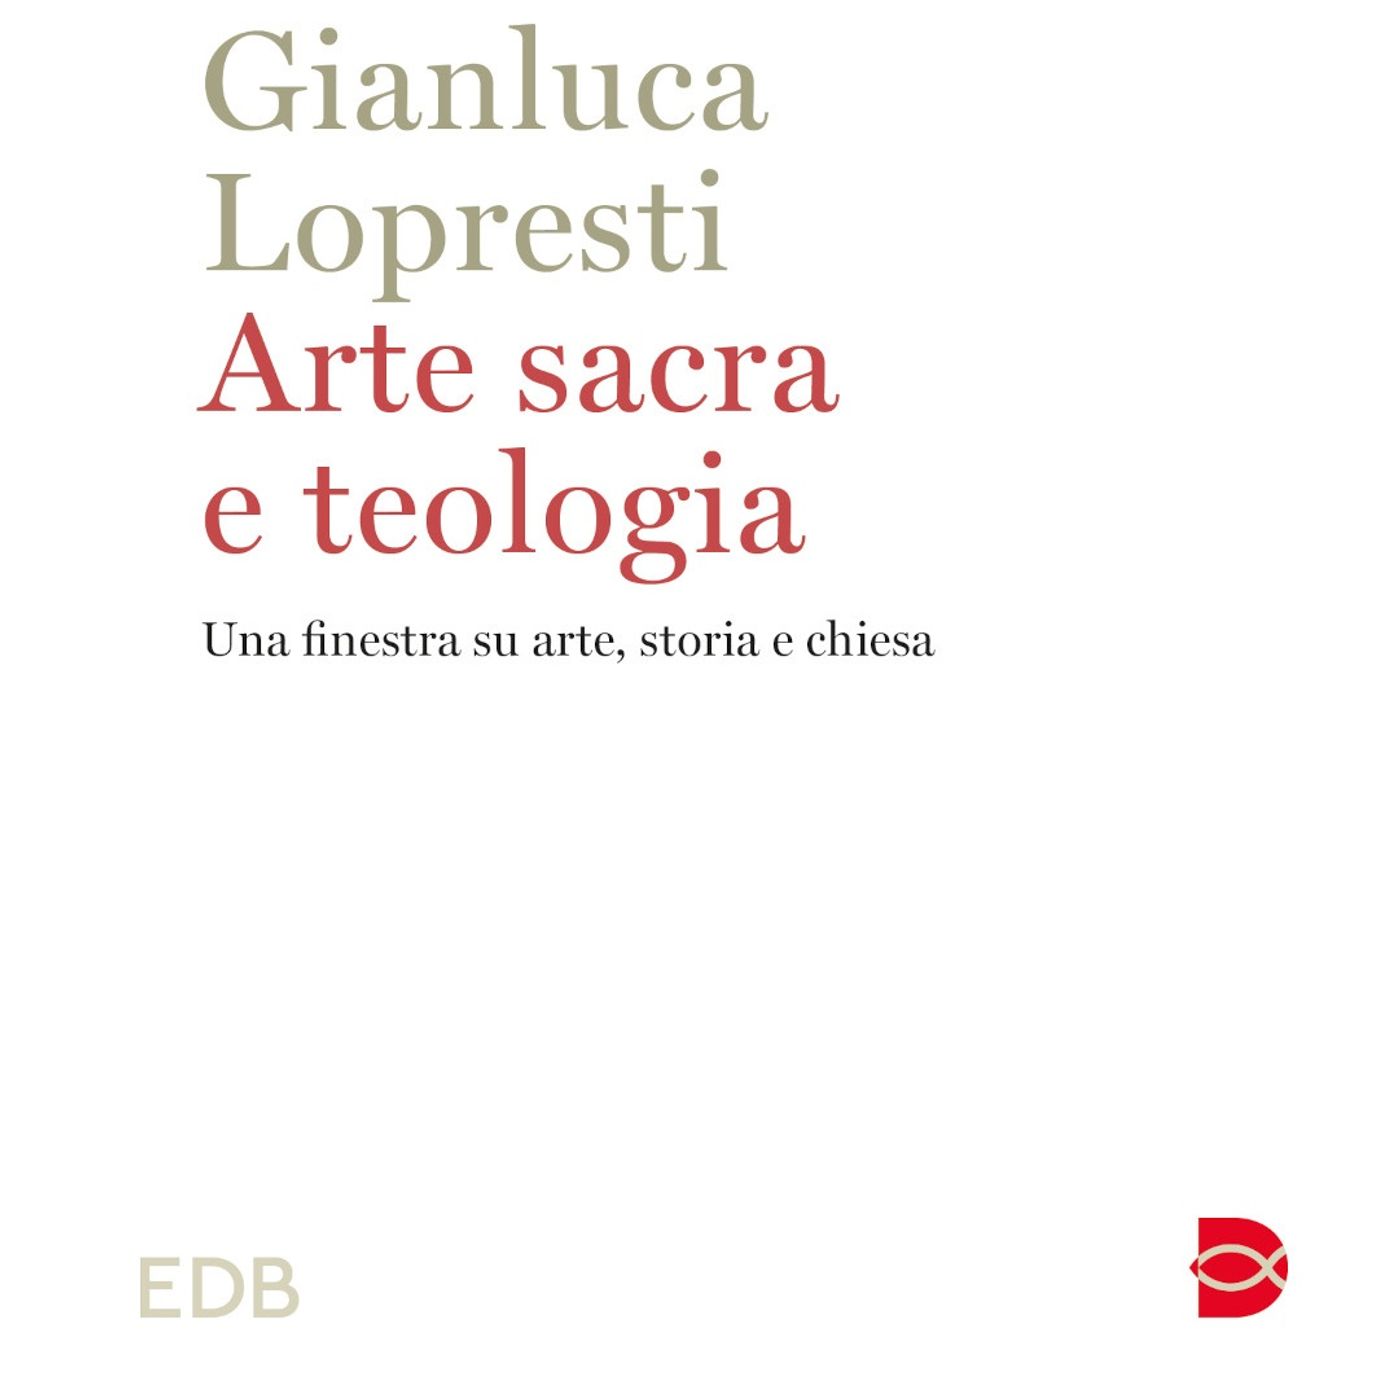 Gianluca Lopresti "Arte sacra e teologia"